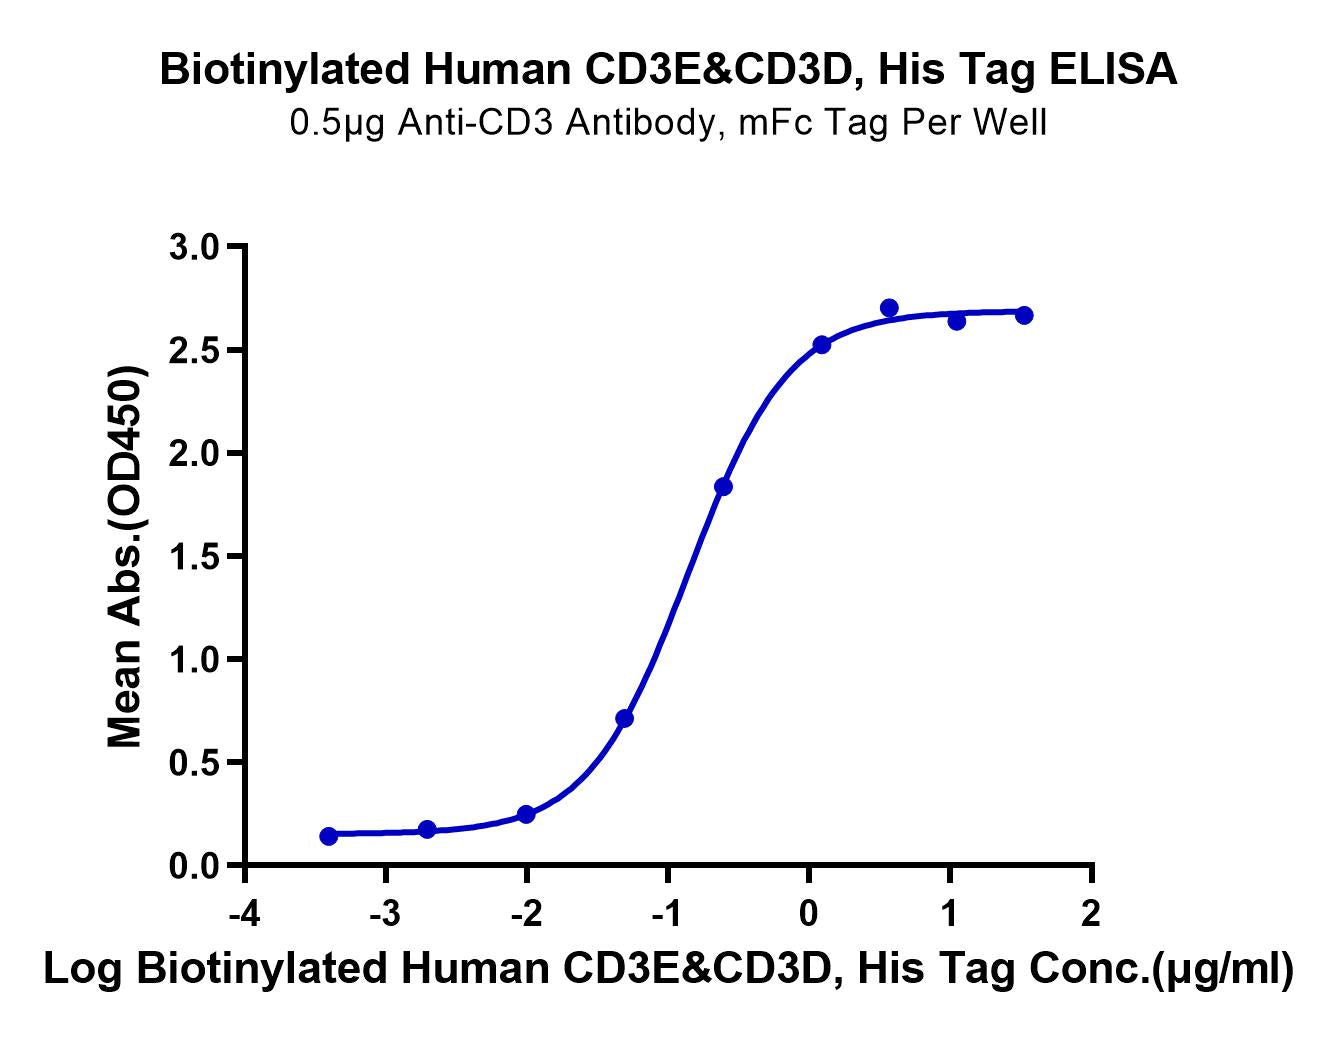 Biotinylated Human CD3E&CD3D/CD3 epsilon&CD3 delta Protein (Primary Amine Labeling)  (CD3-HM105B)